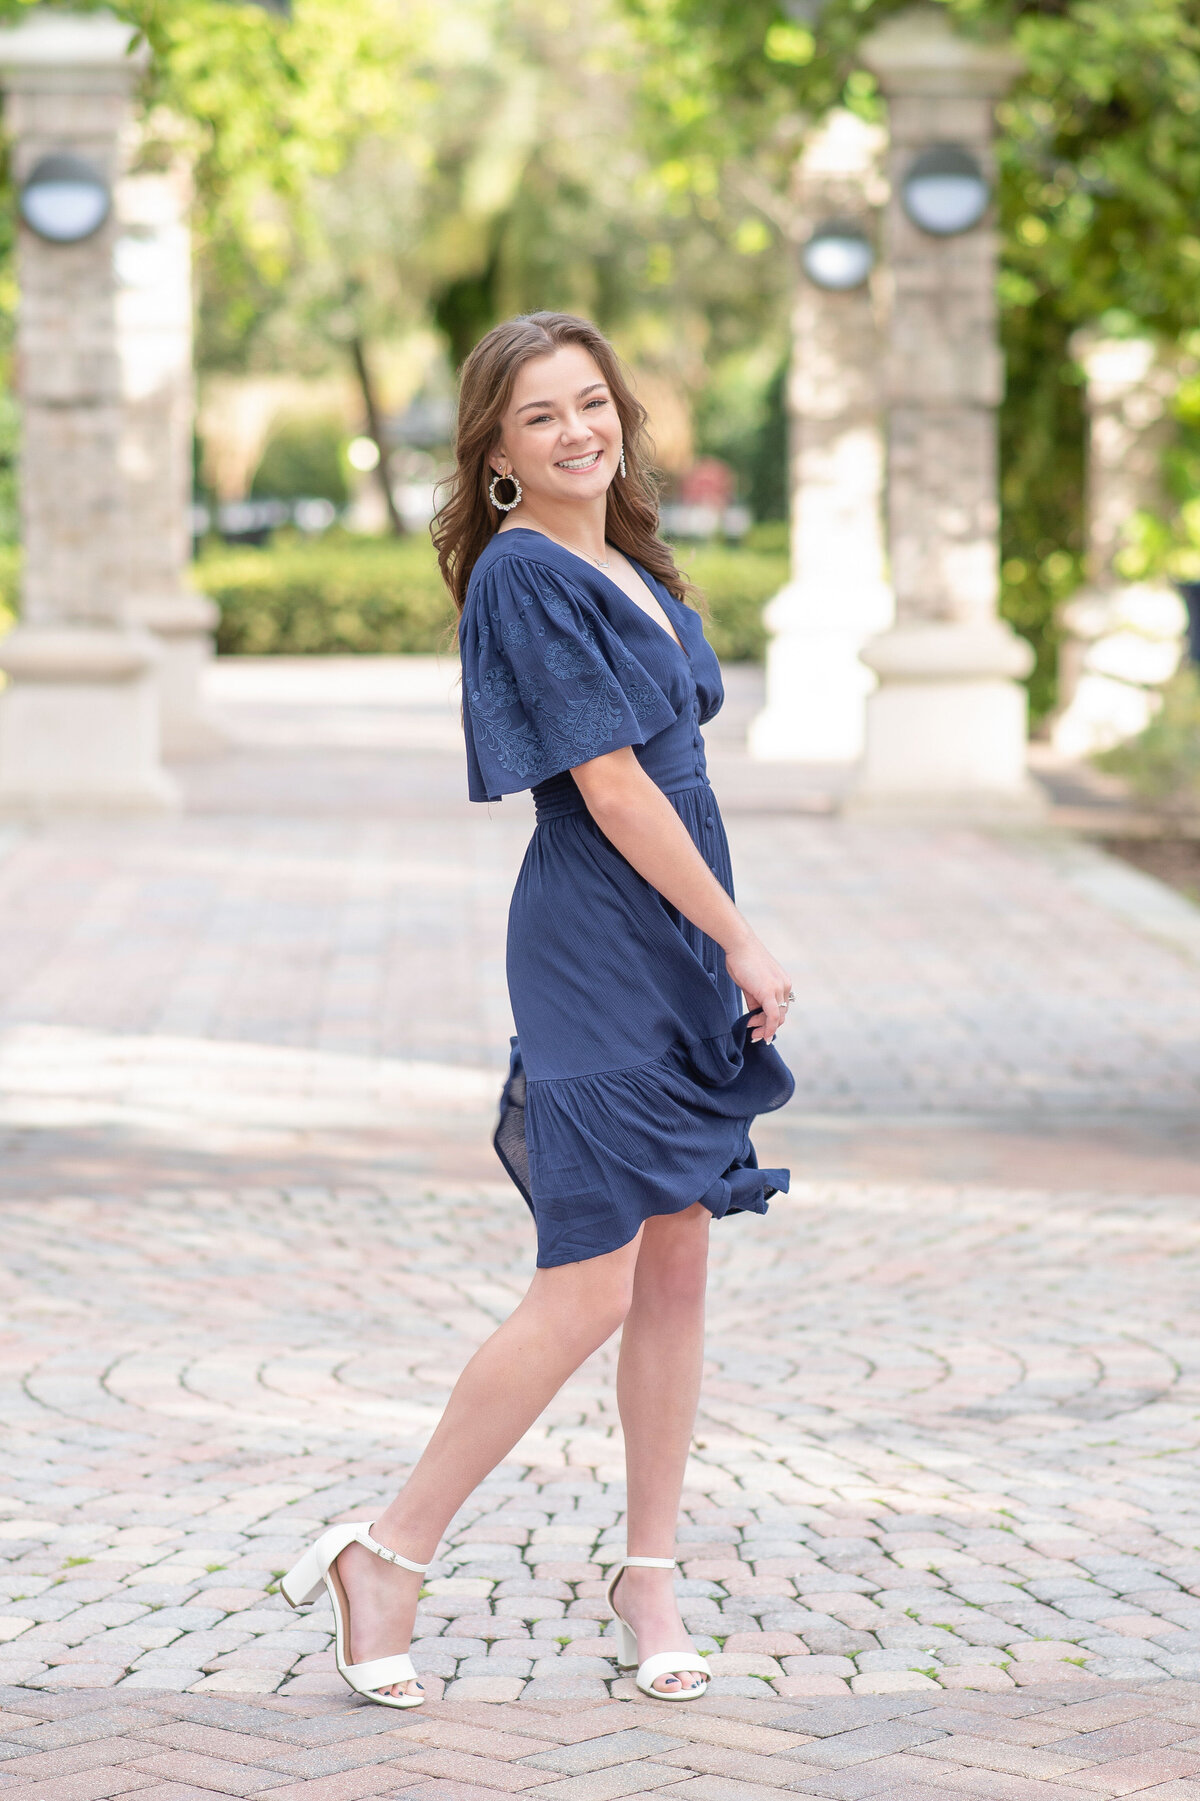 High school senior girl in blue dress twirling in brick walkway.